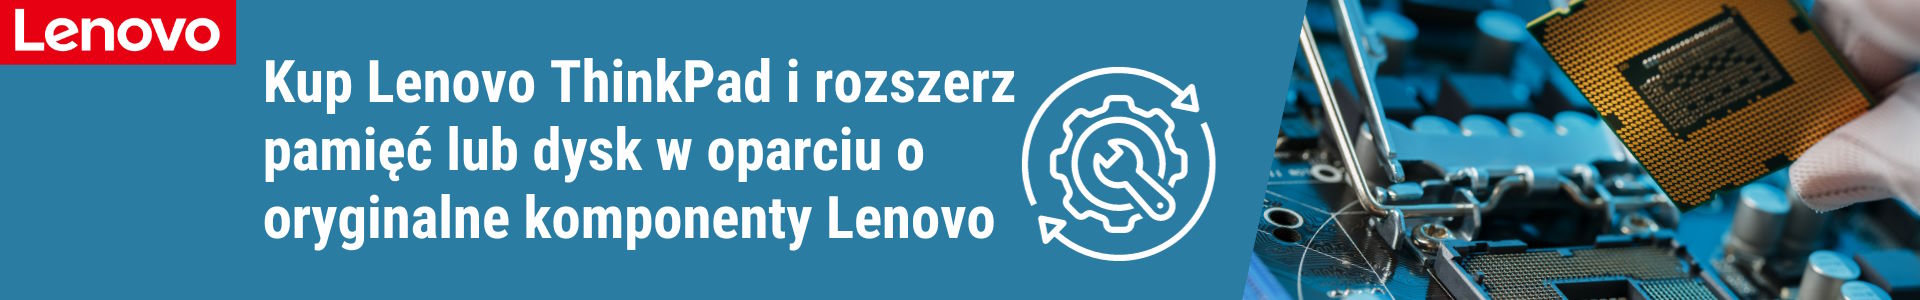 Kup laptopa Lenovo ThinkPad rozszerzonego o oryginalne pamięci i dyski Lenovo